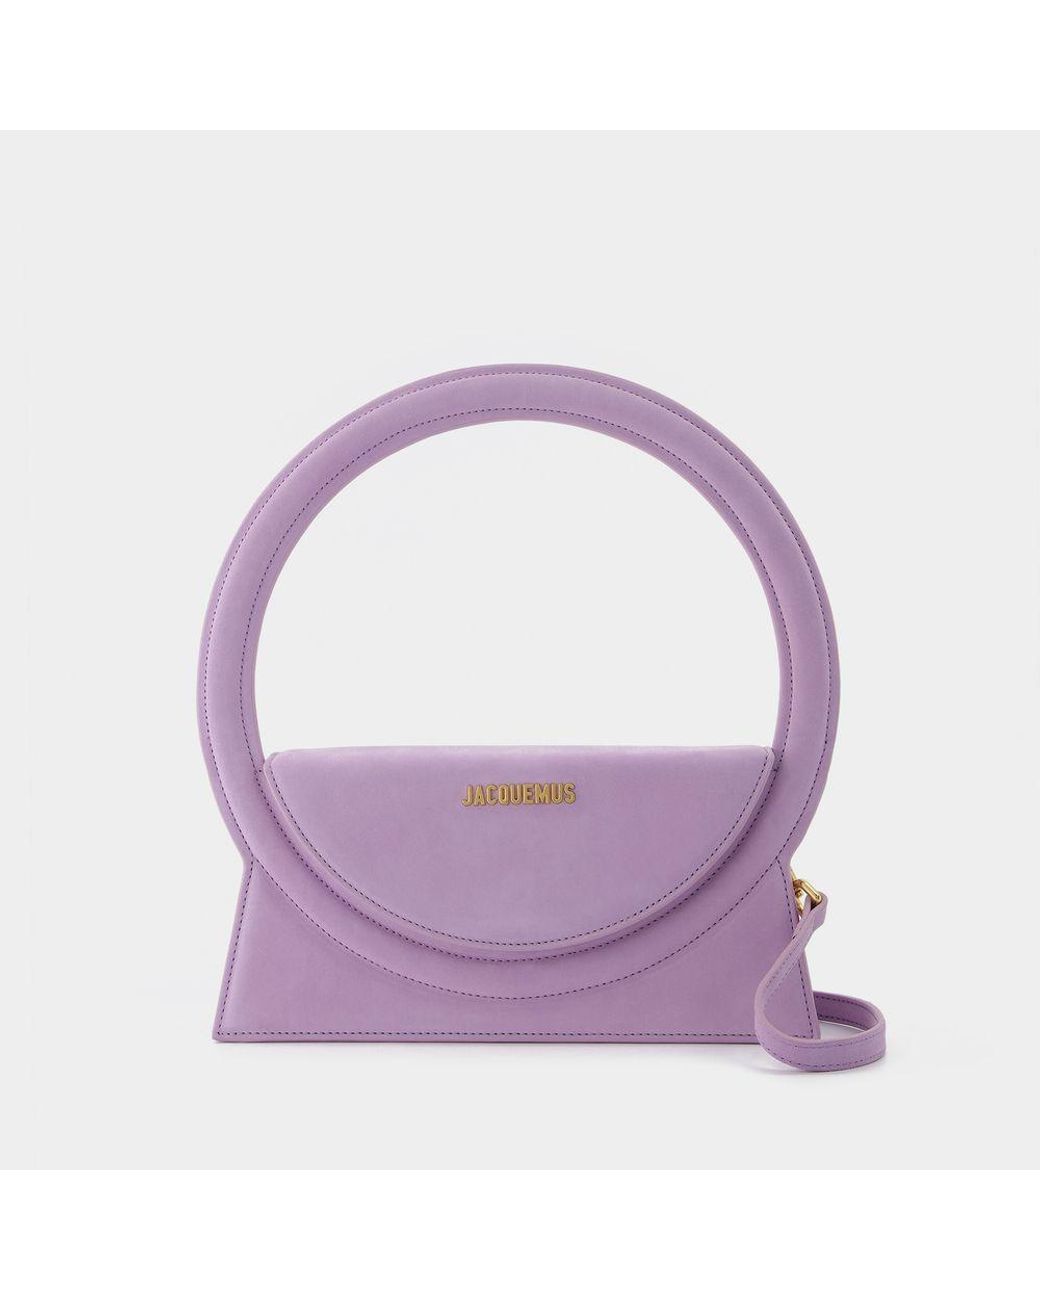 Jacquemus Le Rond Bag in Purple | Lyst